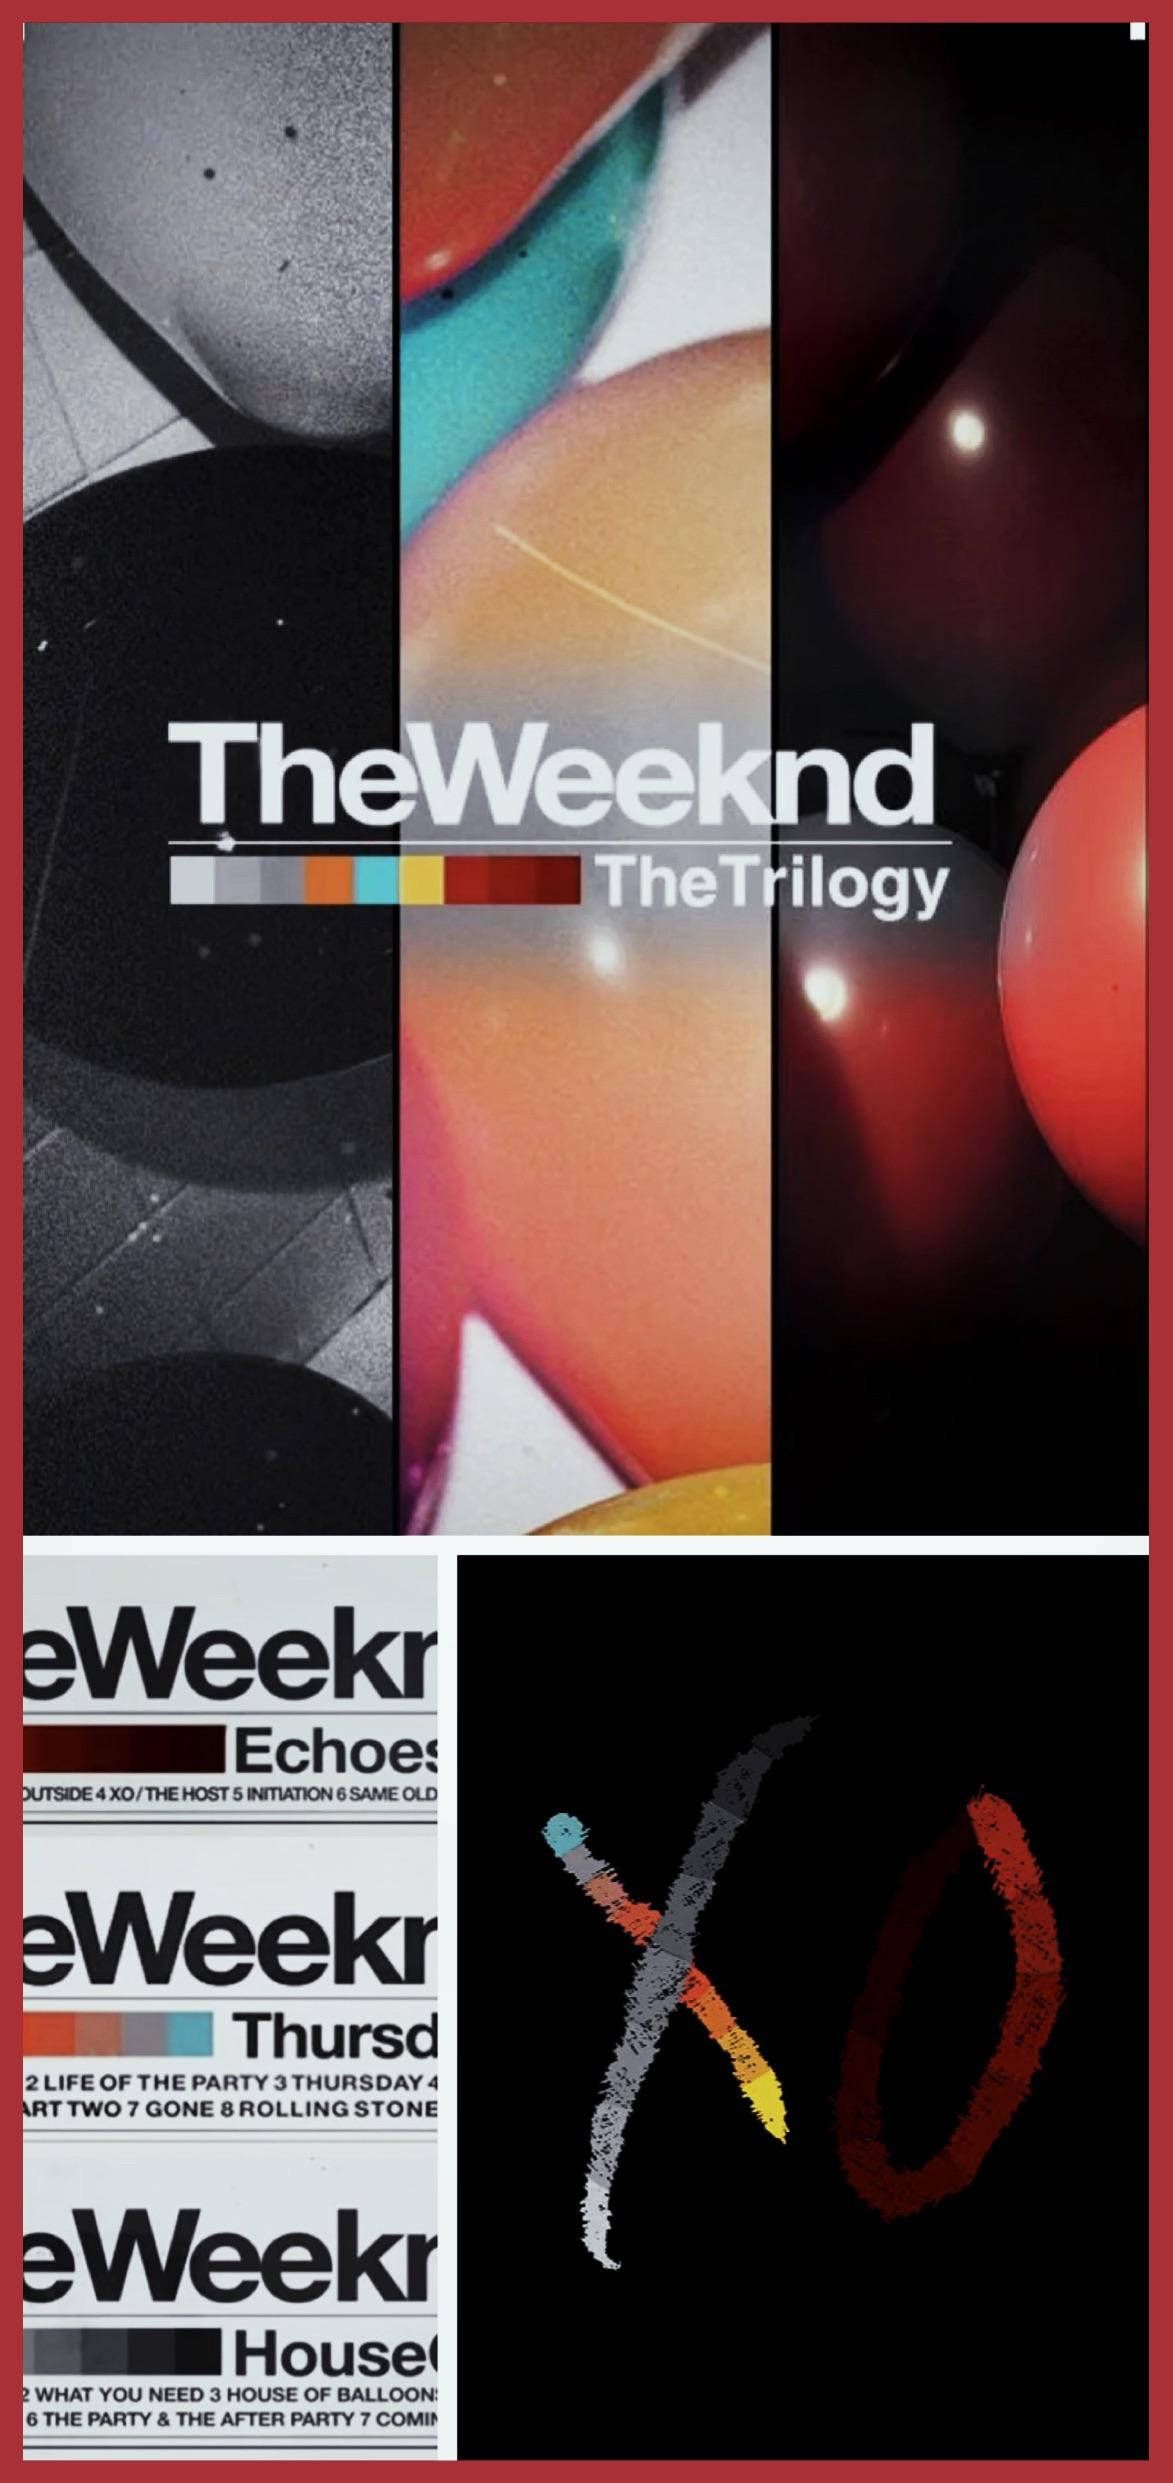 The weeknd - xo - The Weeknd